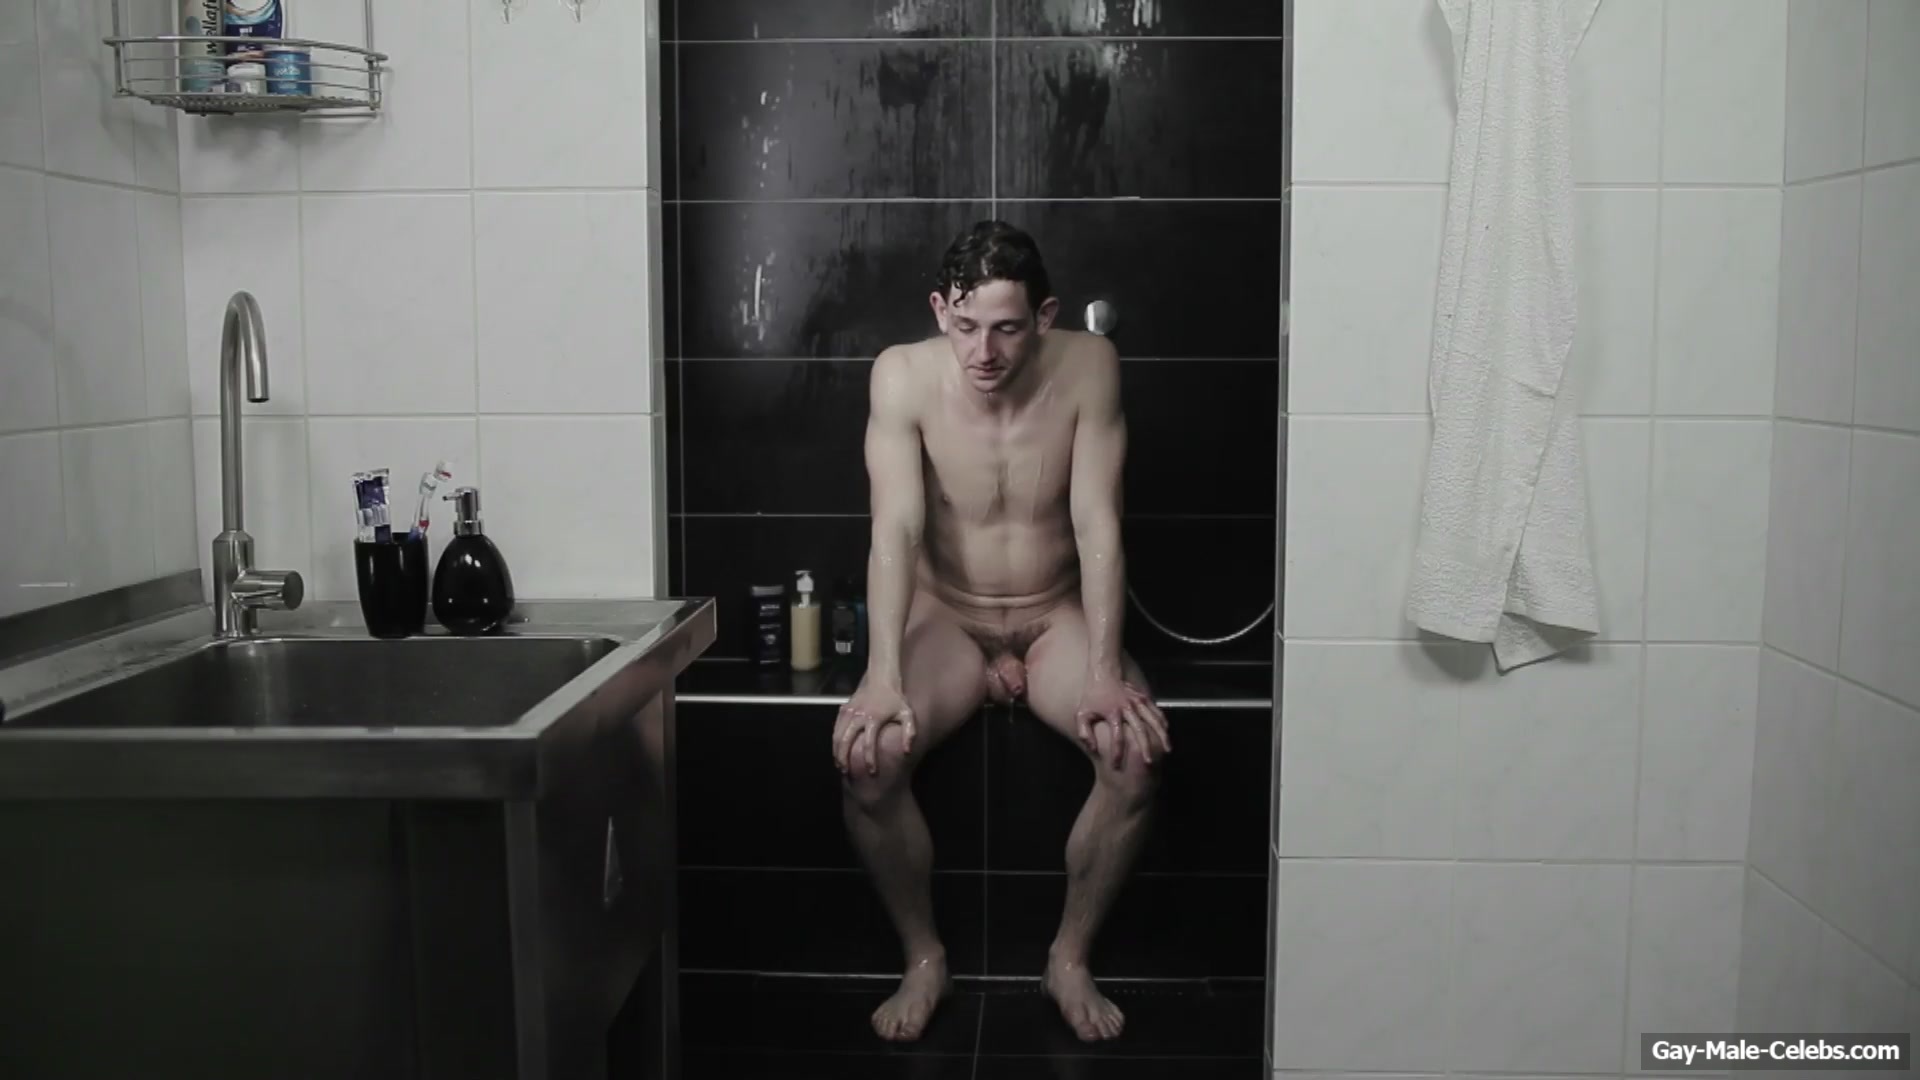 Actor Konstantin Frank Frontal Nude Movie Scenes